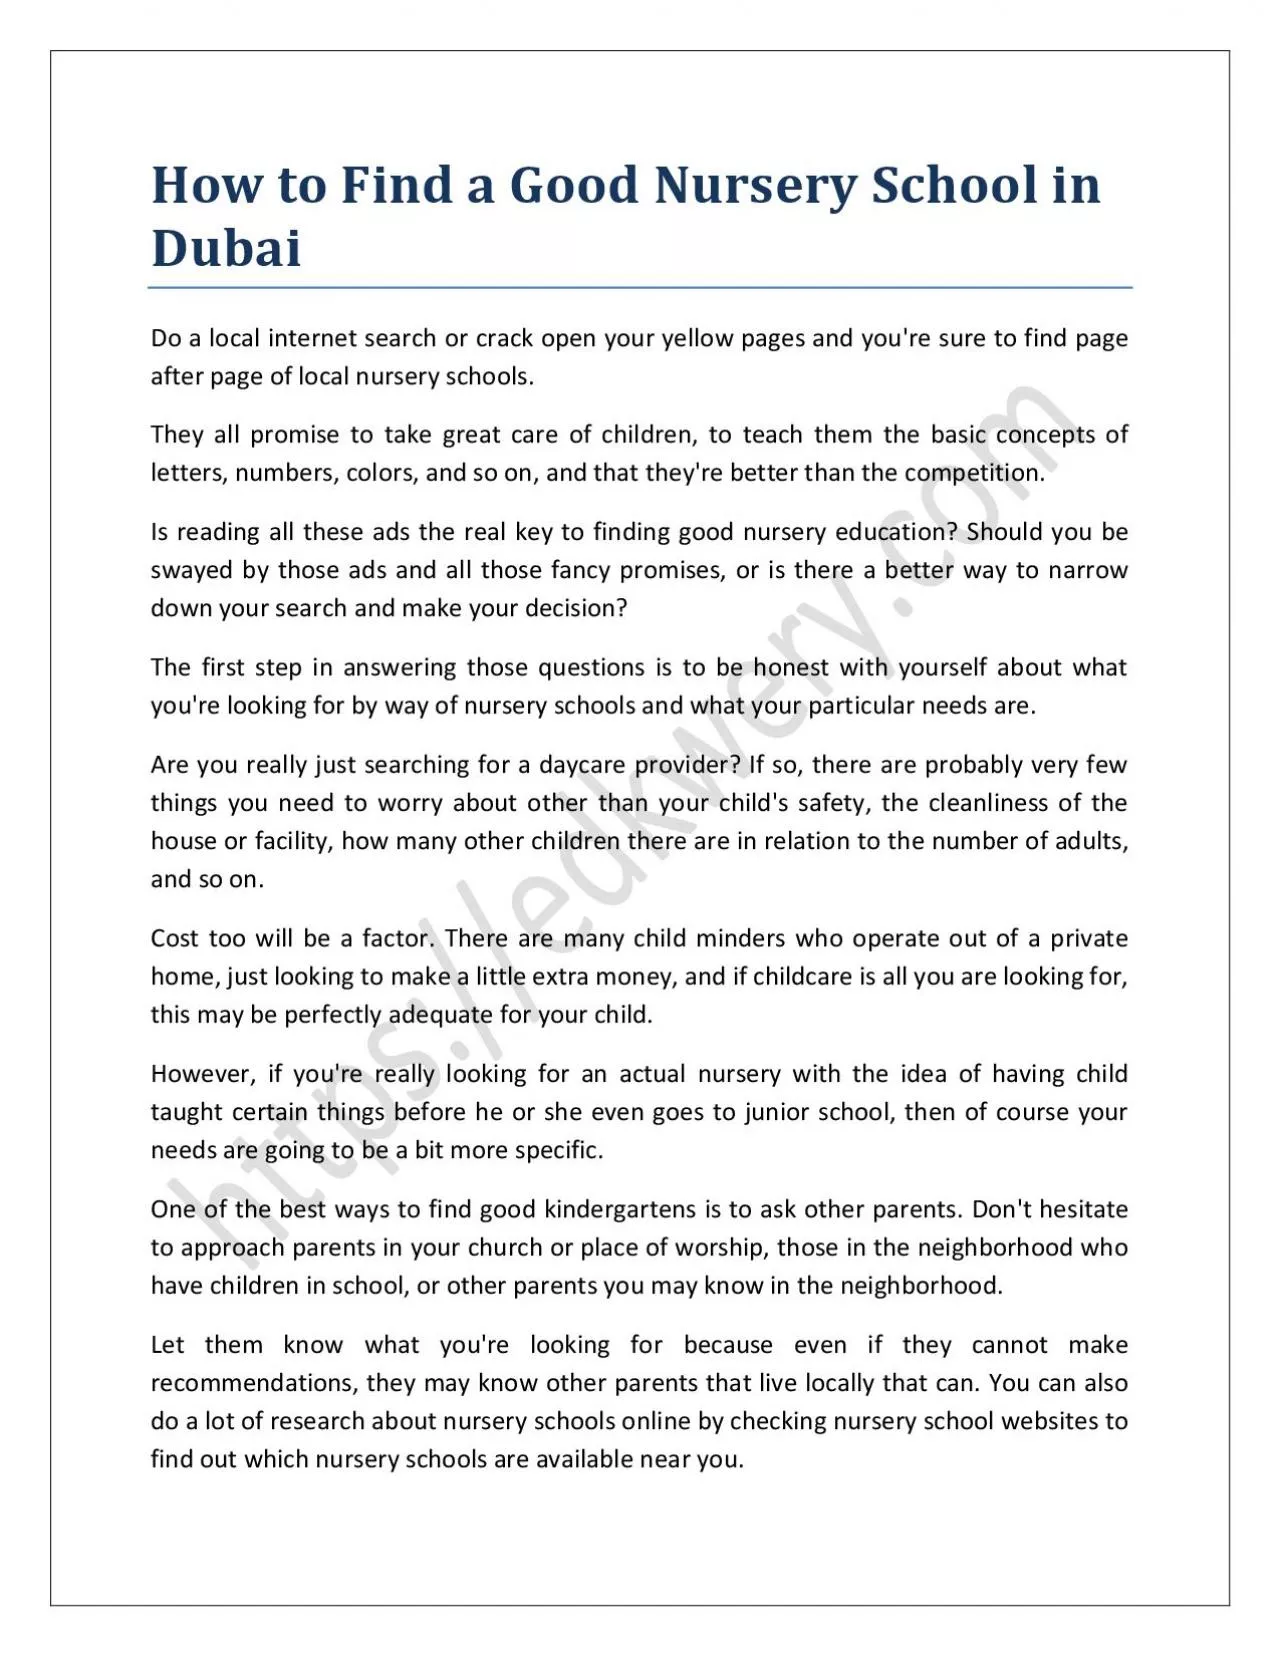 How to Find a Good Nursery School in Dubai